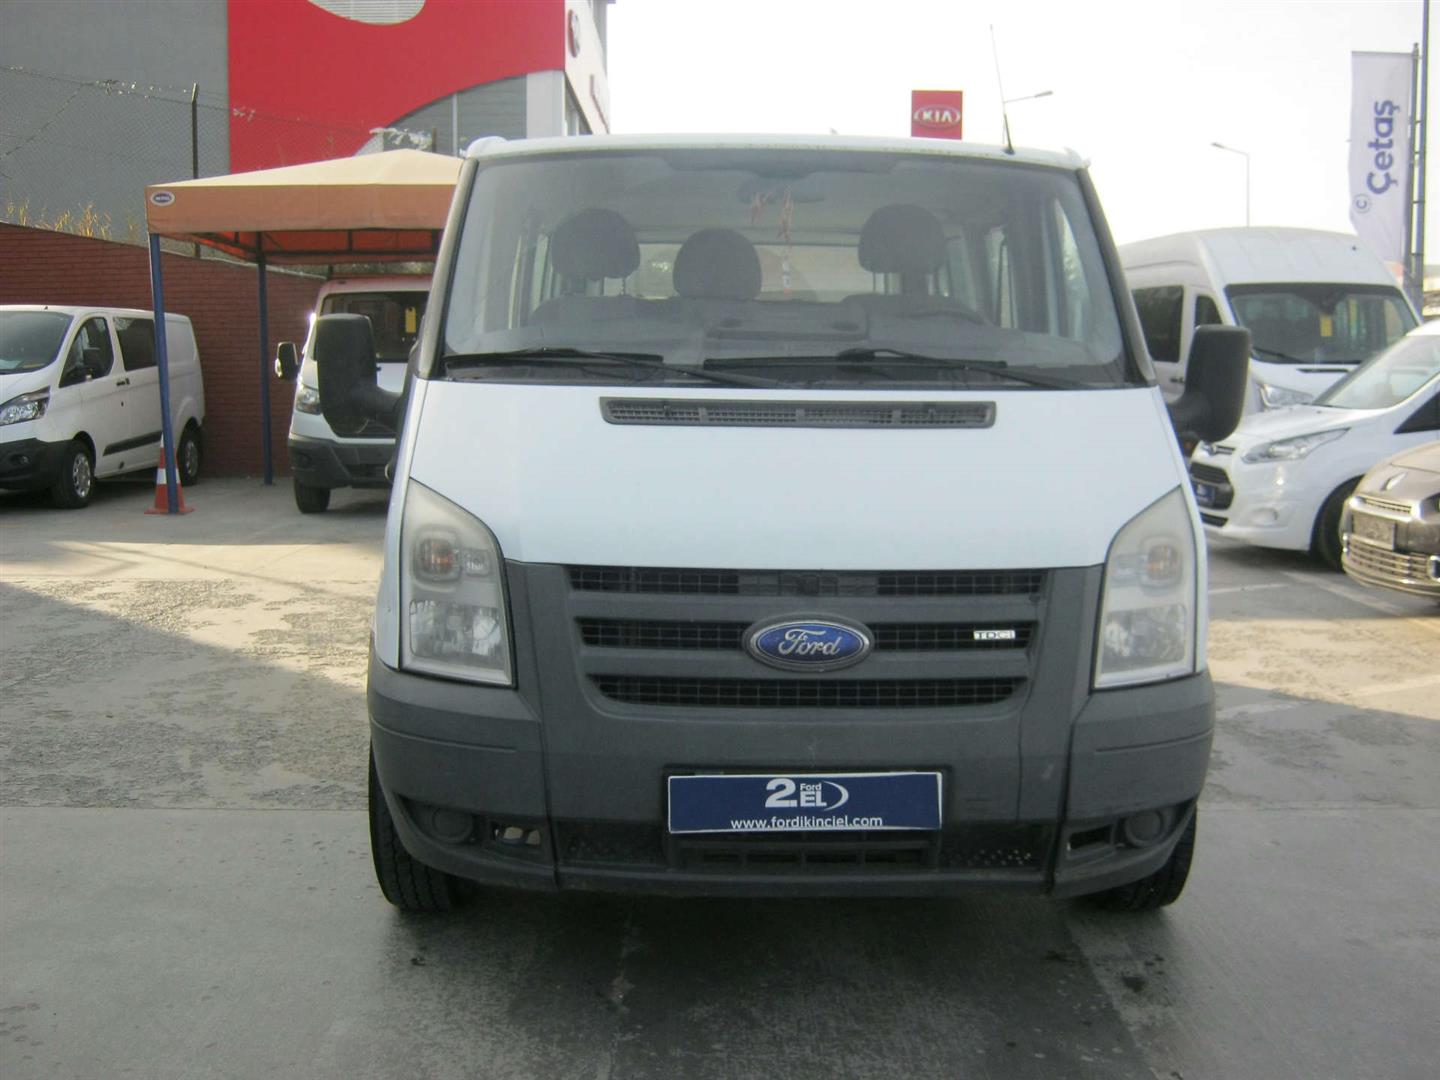 Ford Transit Van | Ford PL